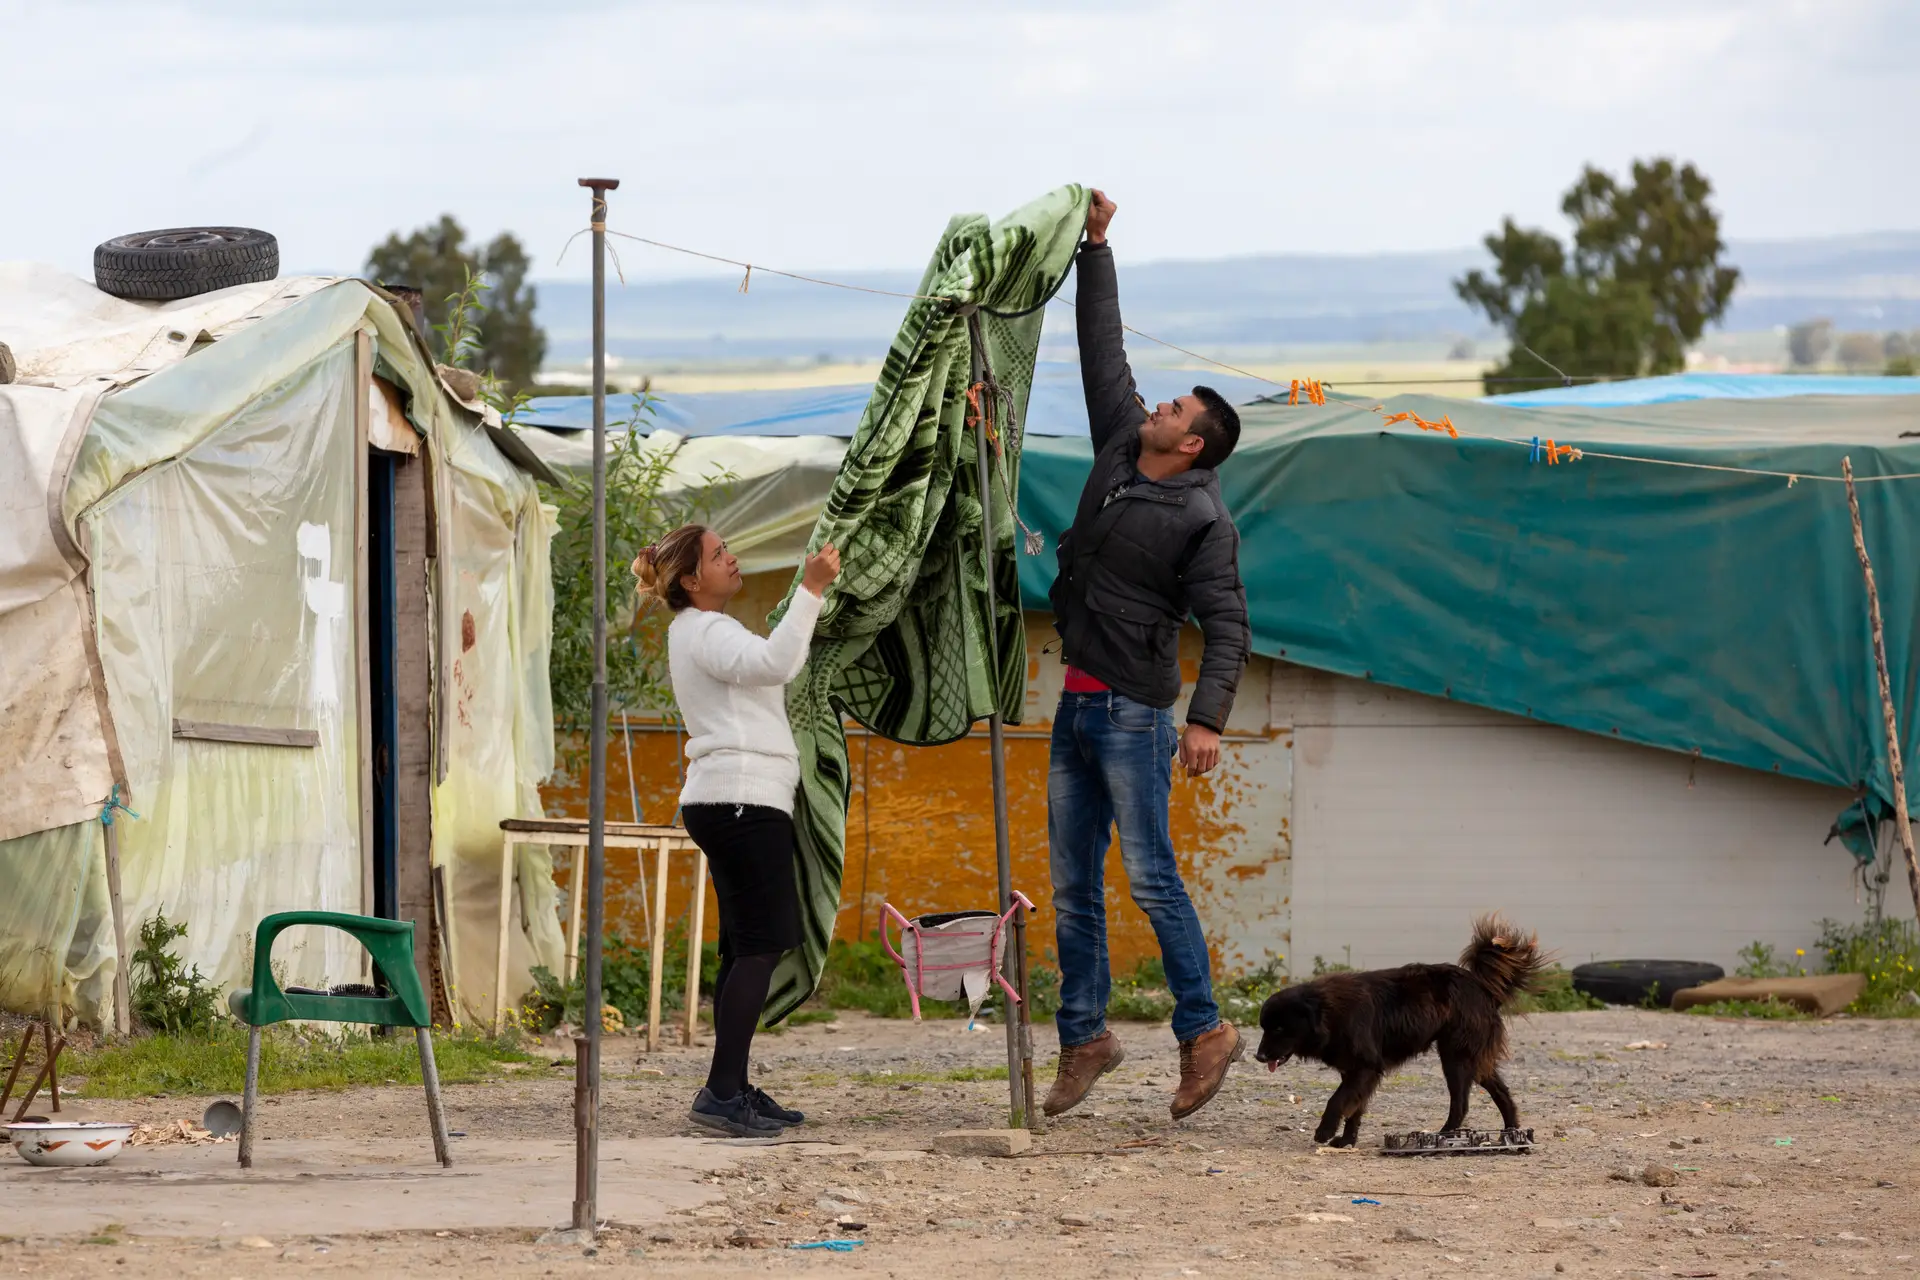 Pobreza afeta portugueses ciganos: 96% vivem abaixo do limiar de pobreza